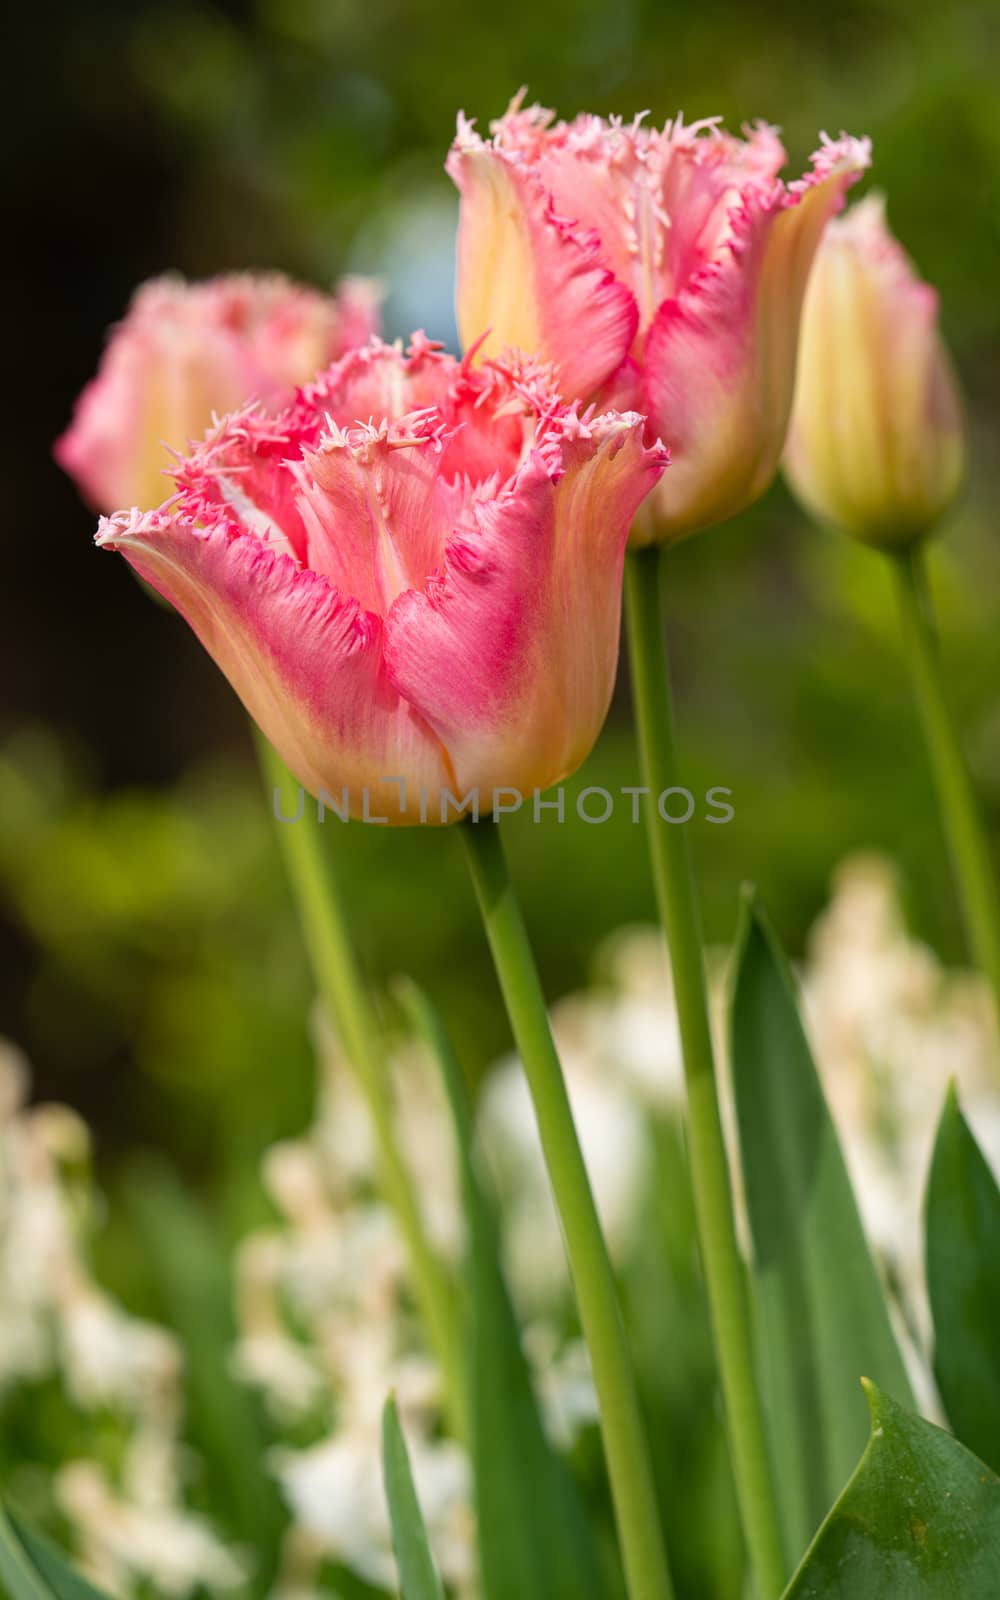 Tulip (Tulipa), close up of the flower of spring